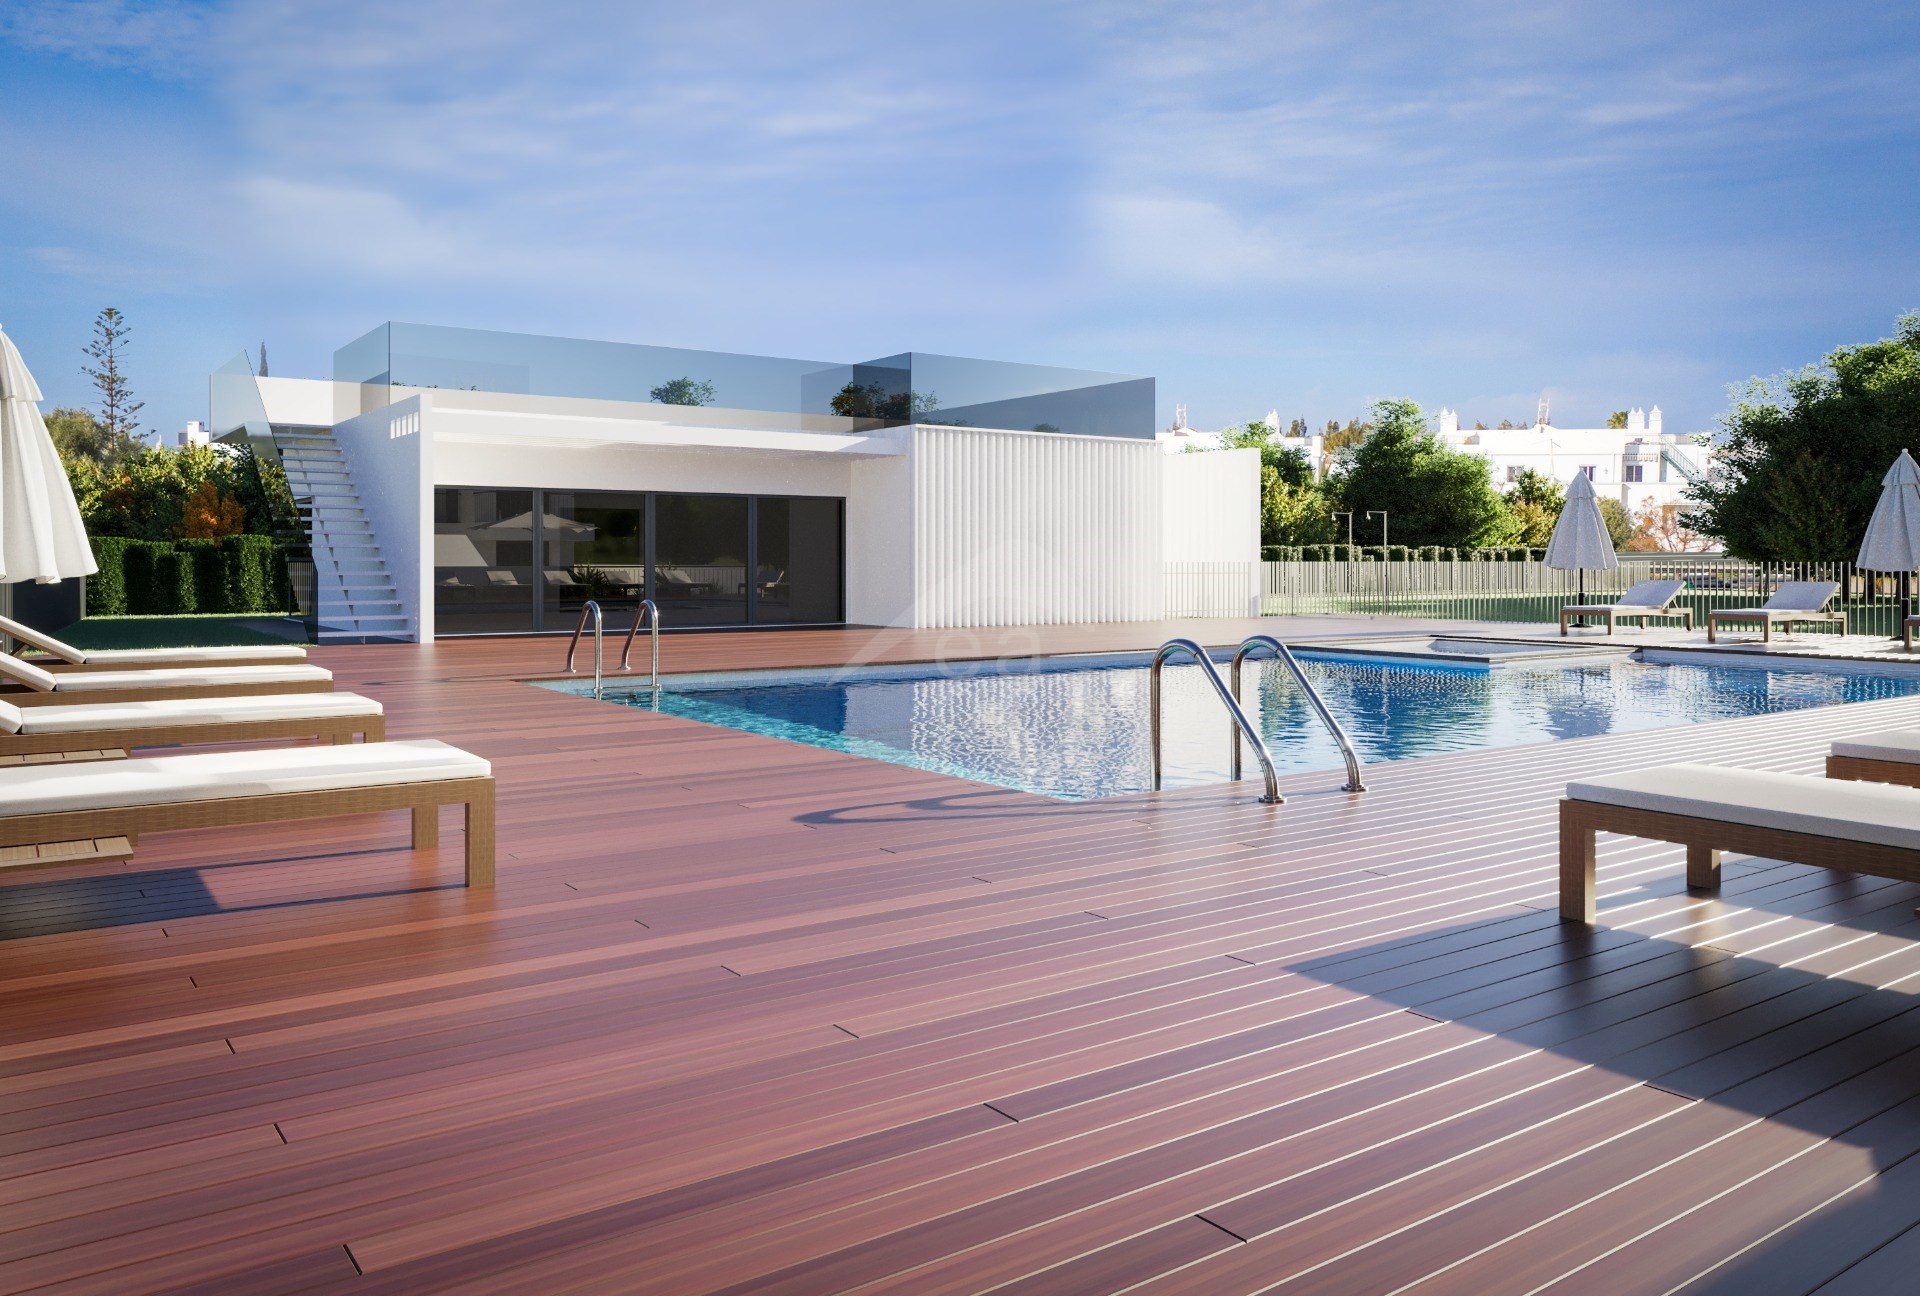 T2 Ground Floor Luxury Apartments Cabanas Tavira with swimming pool